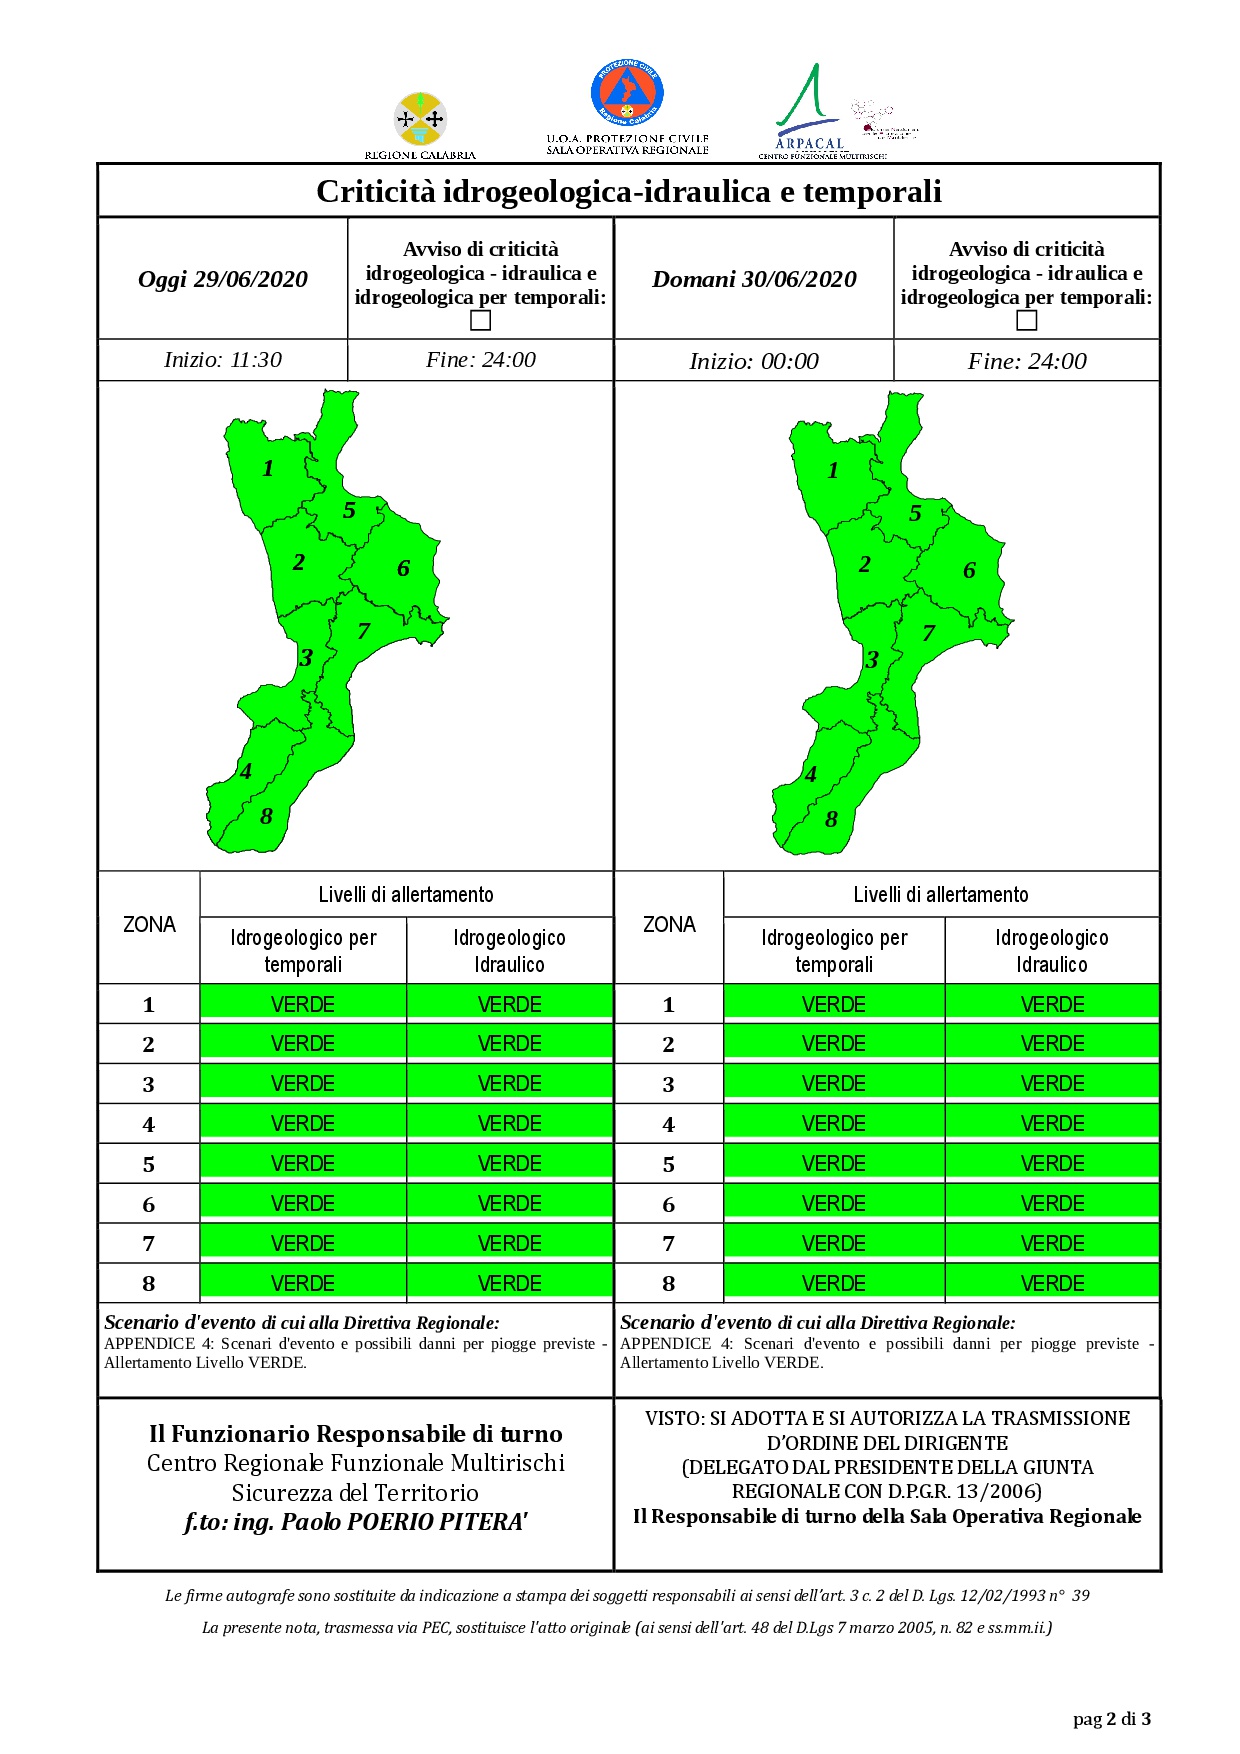 Criticità idrogeologica-idraulica e temporali in Calabria 29-06-2020